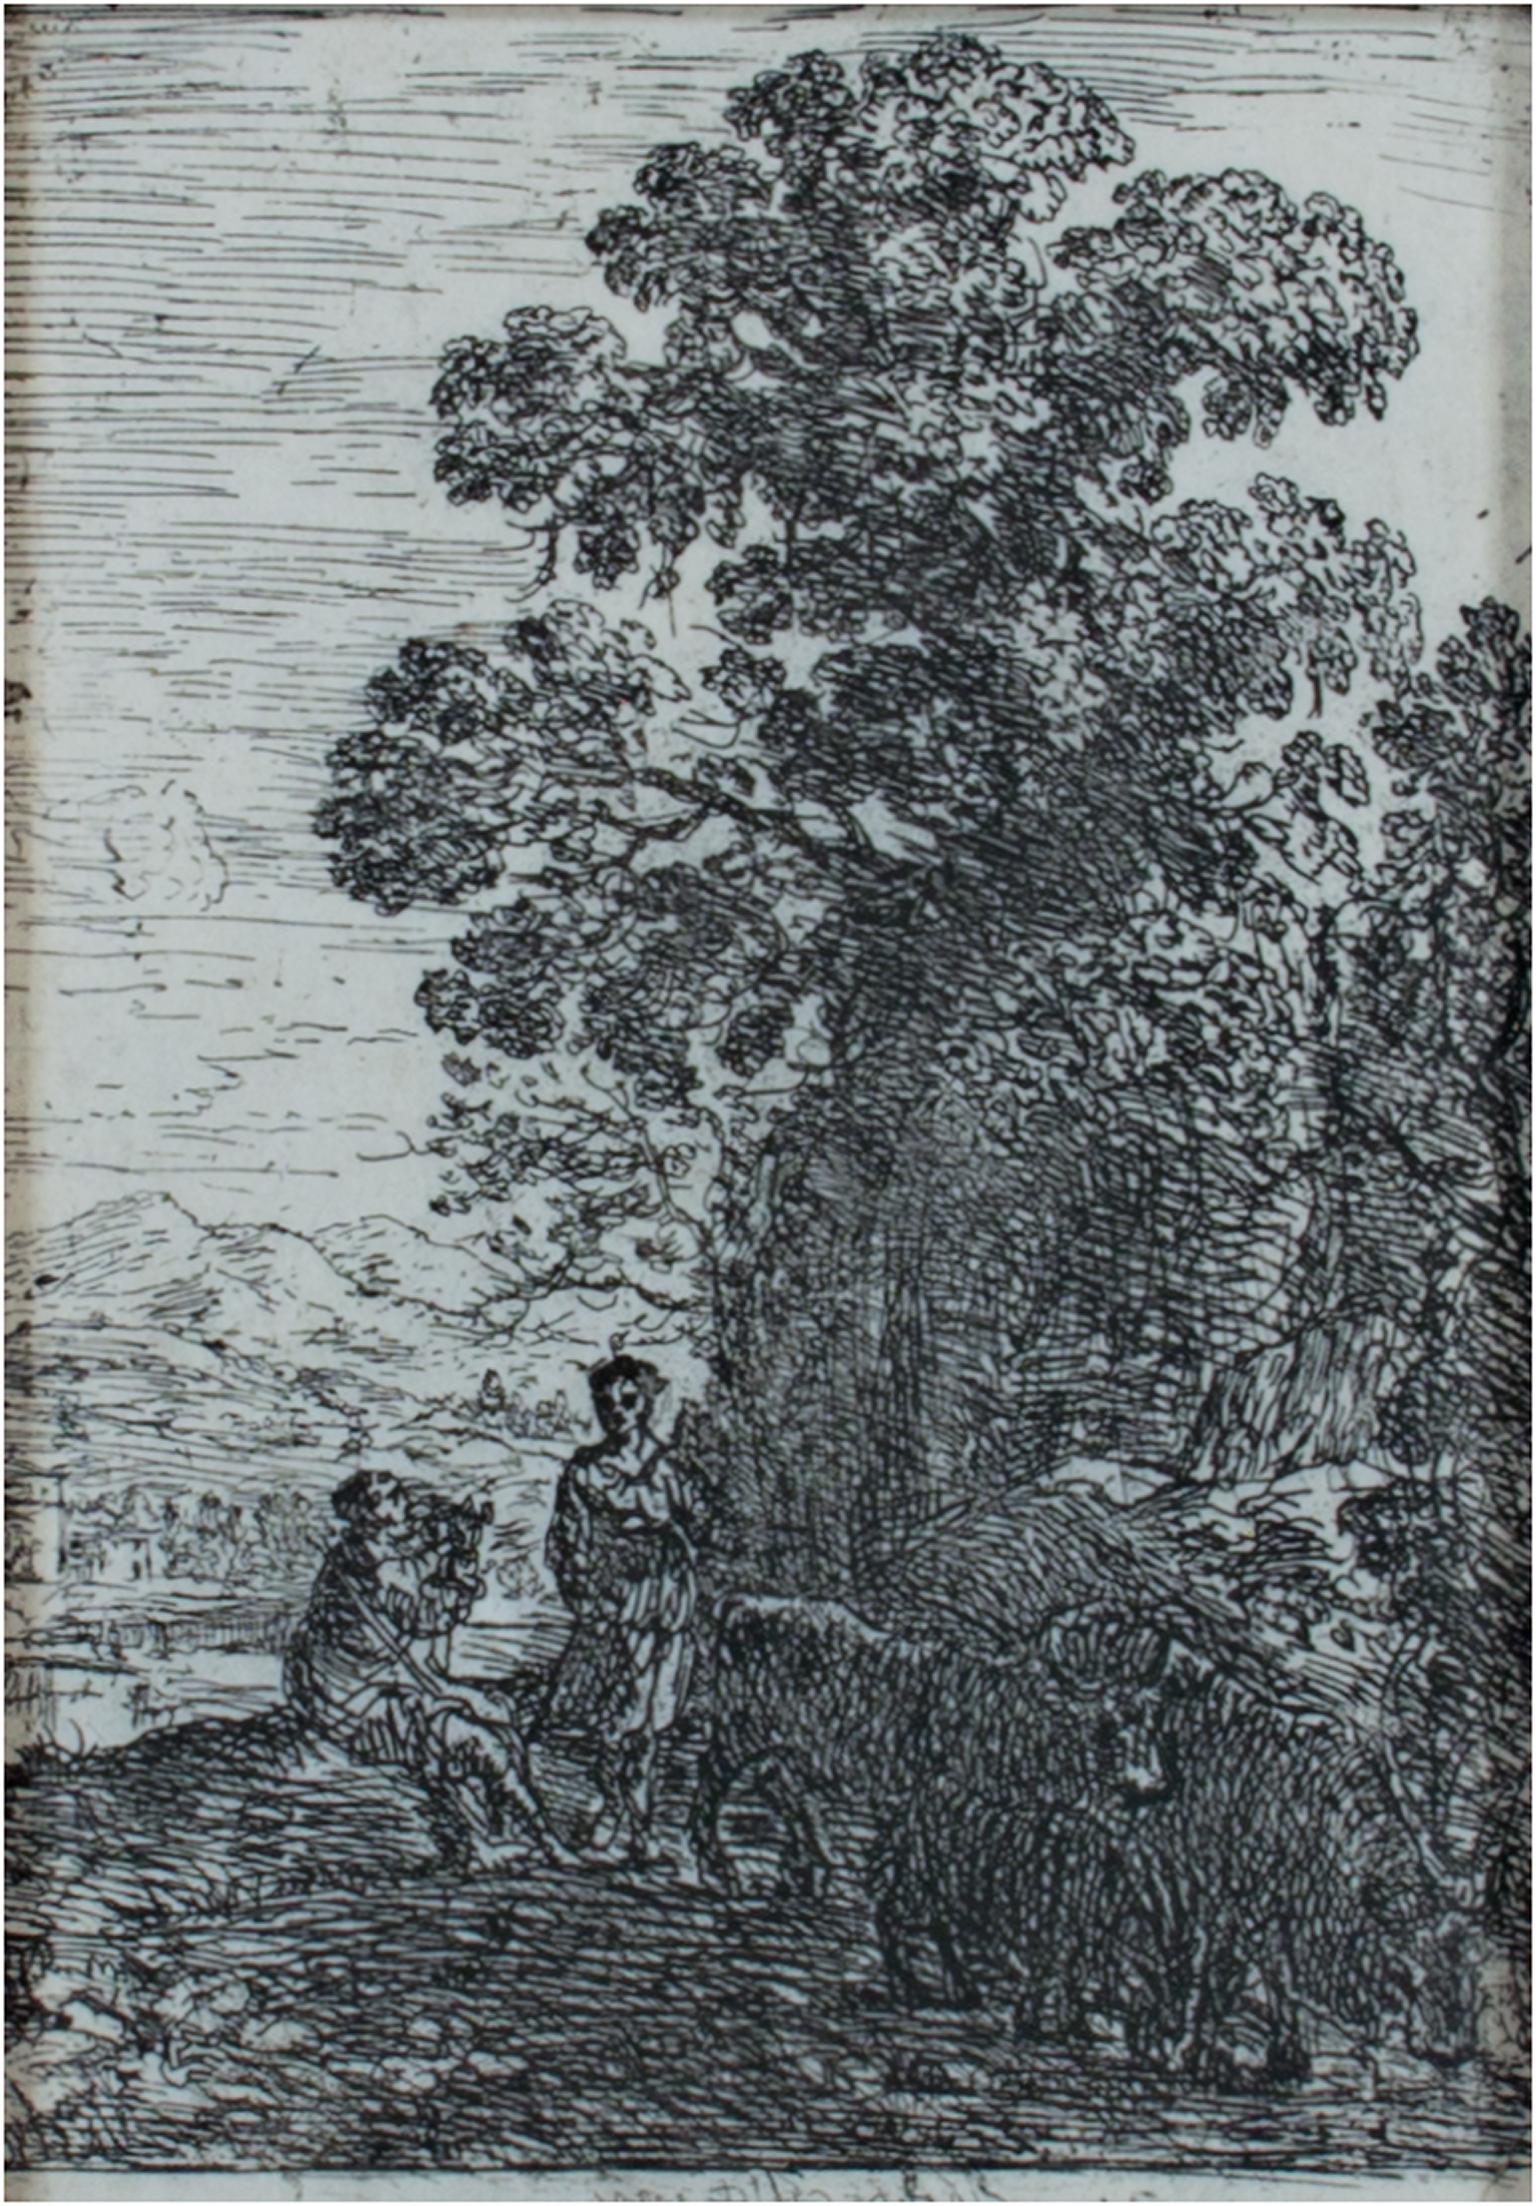 Claude Lorrain Landscape Print - 17th century etching black and white landscape forest trees figures scene